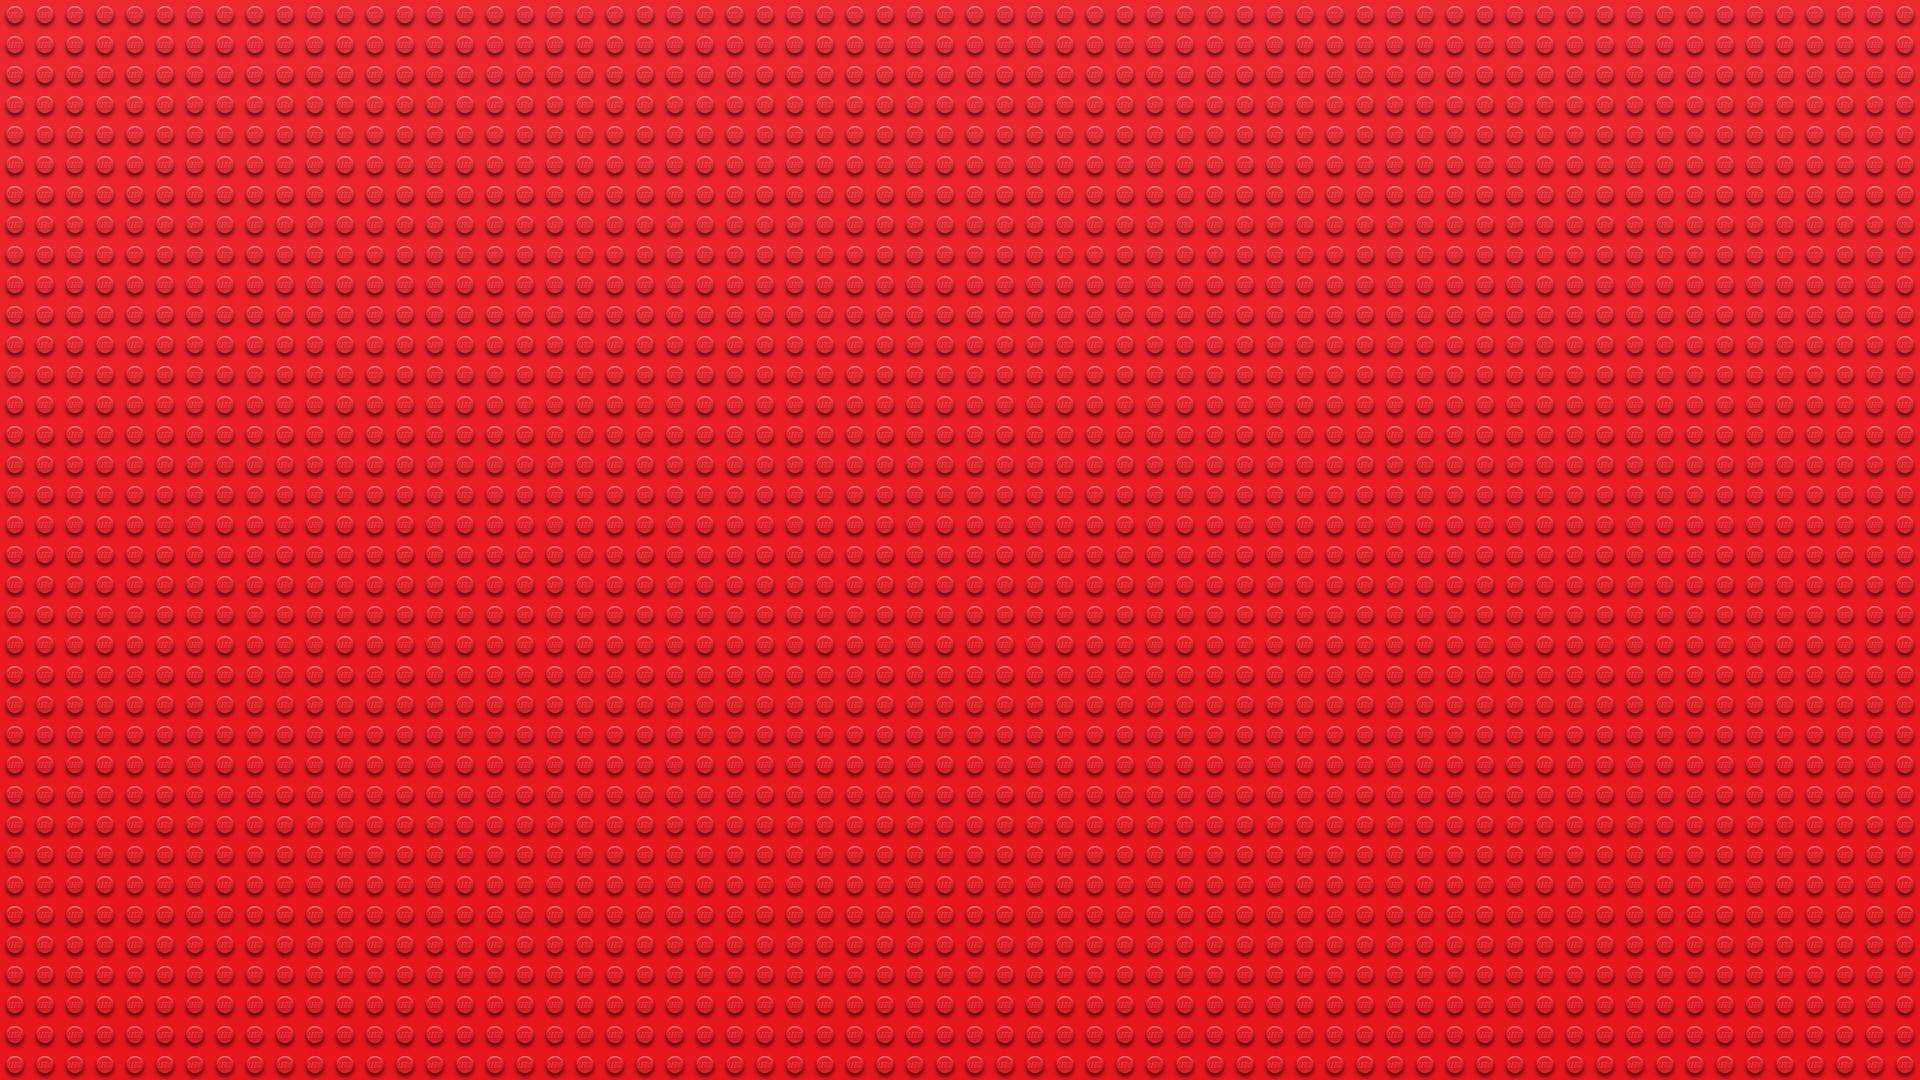 Lego Wallpaper 29 403359 High Definition Wallpaper. wallalay